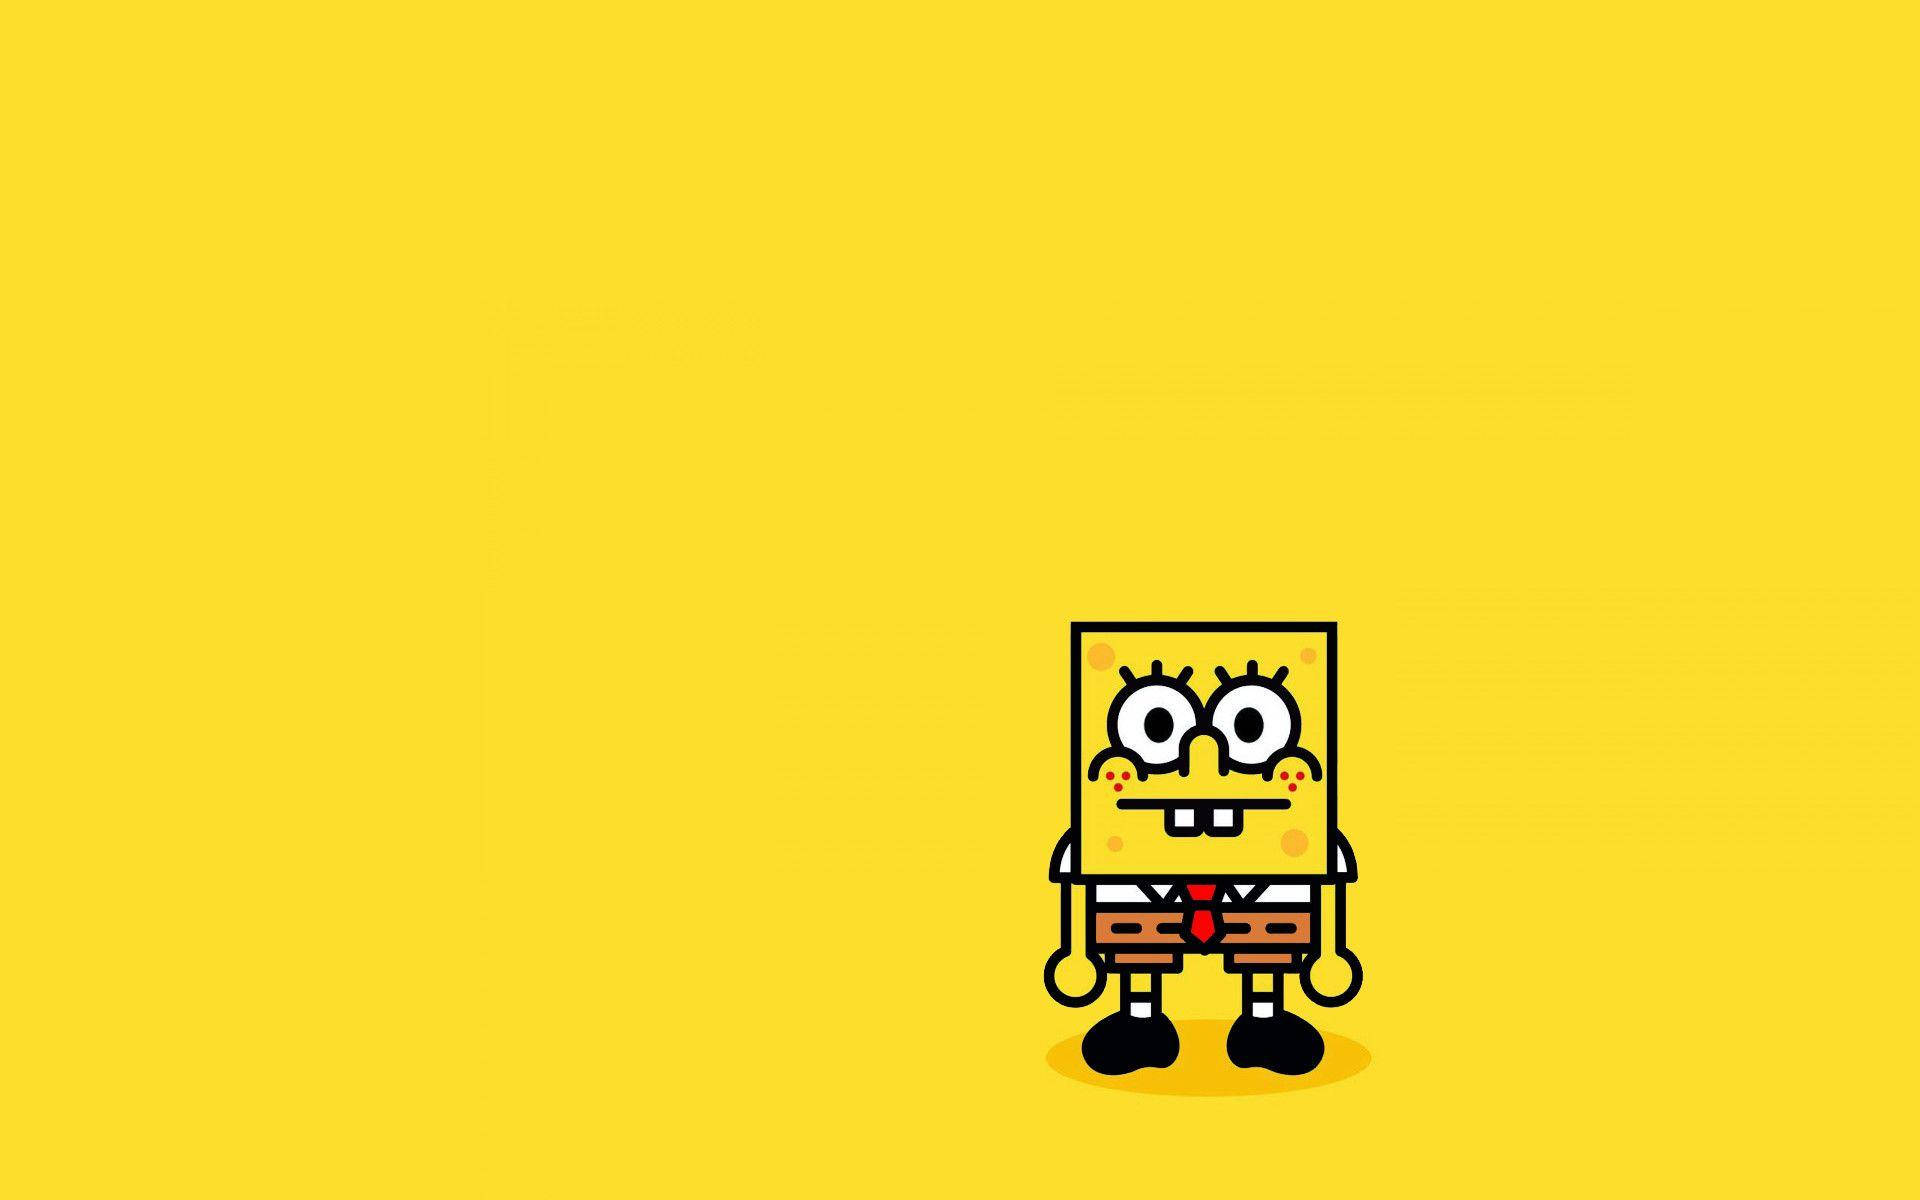 Cute Spongebob Cartoon Illustration Background